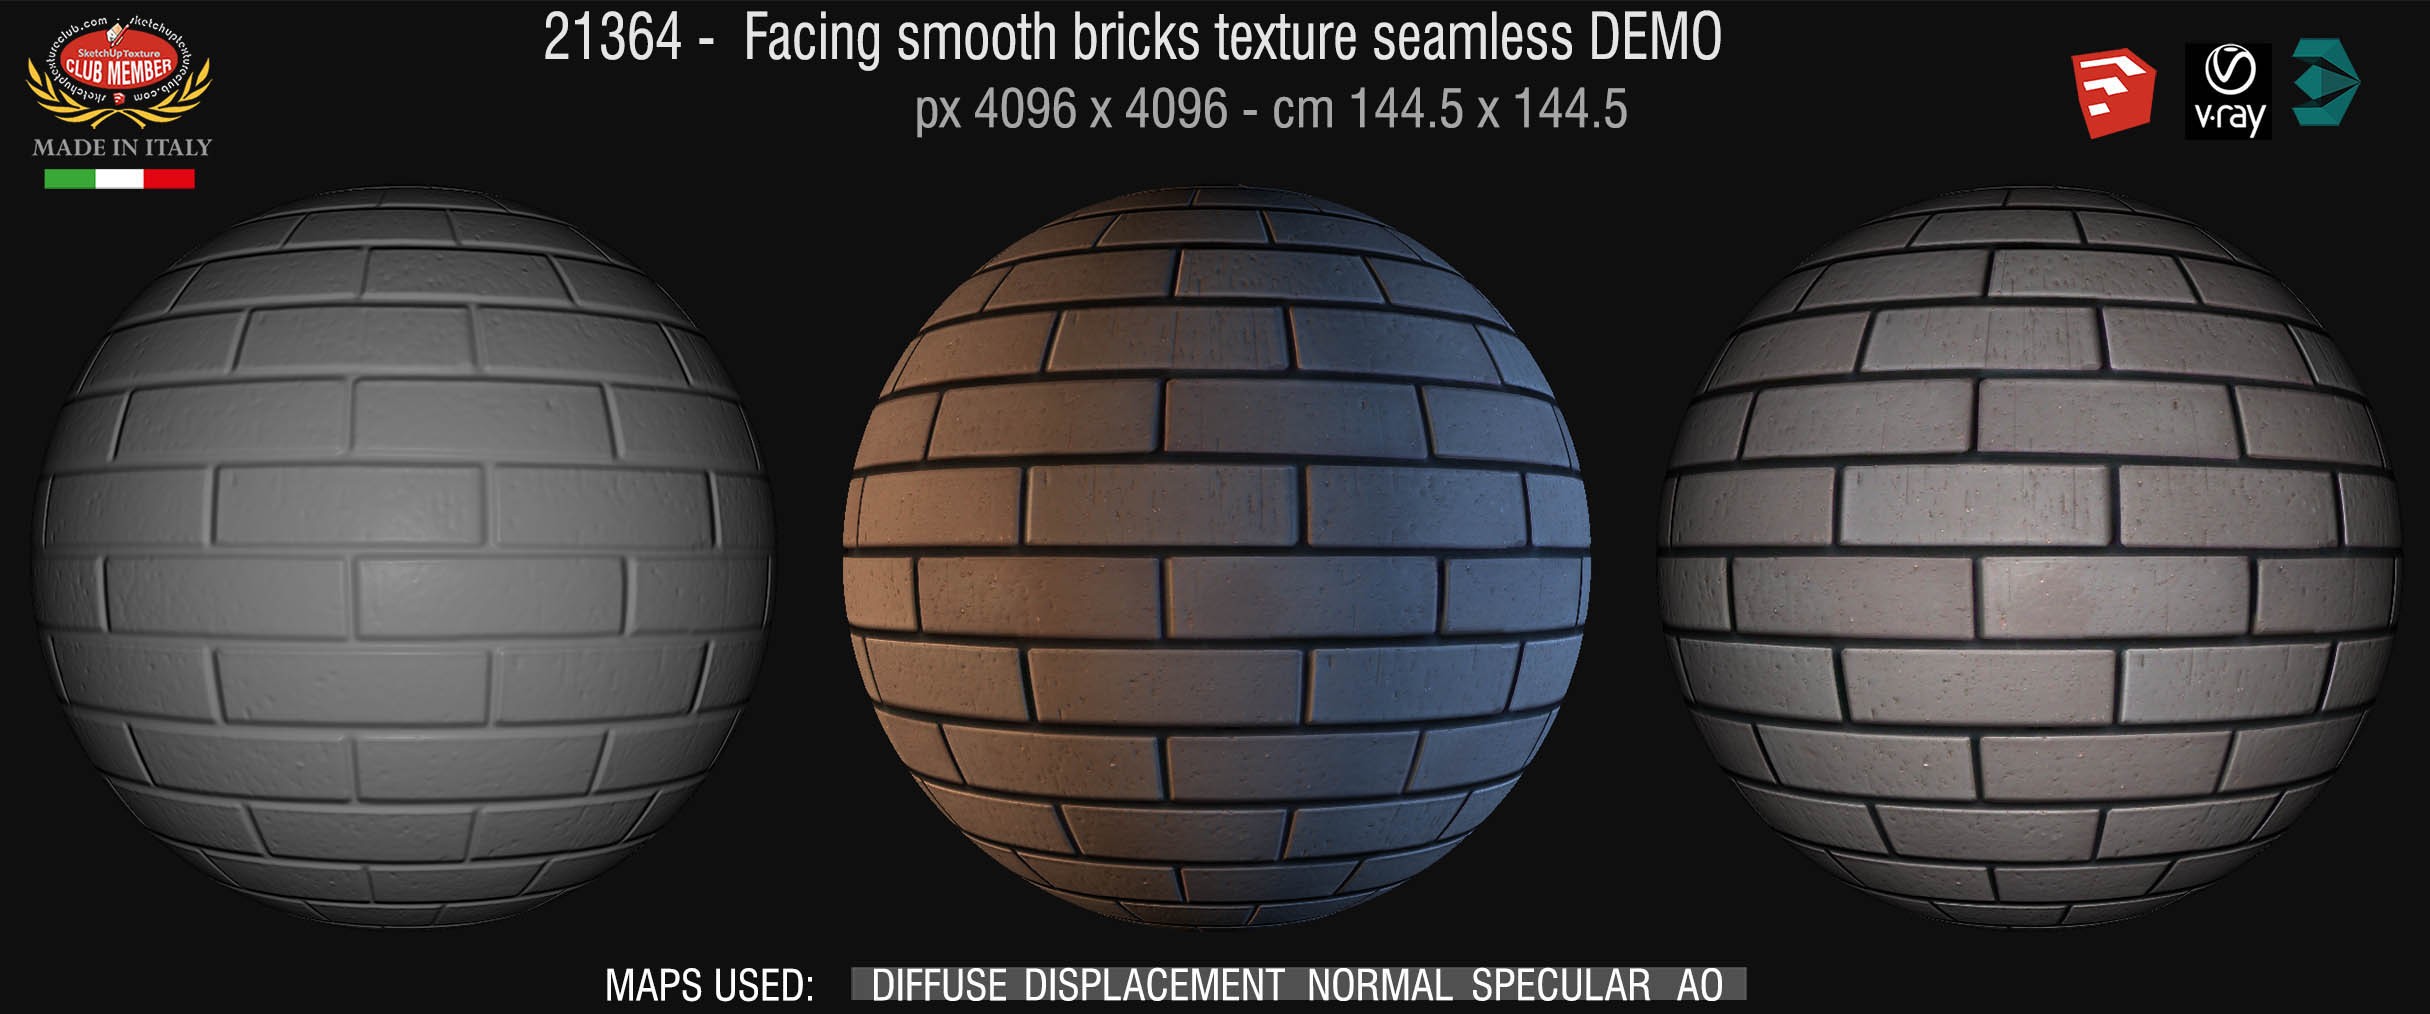 21364 facing smooth bricks texture seamless + maps DEMO